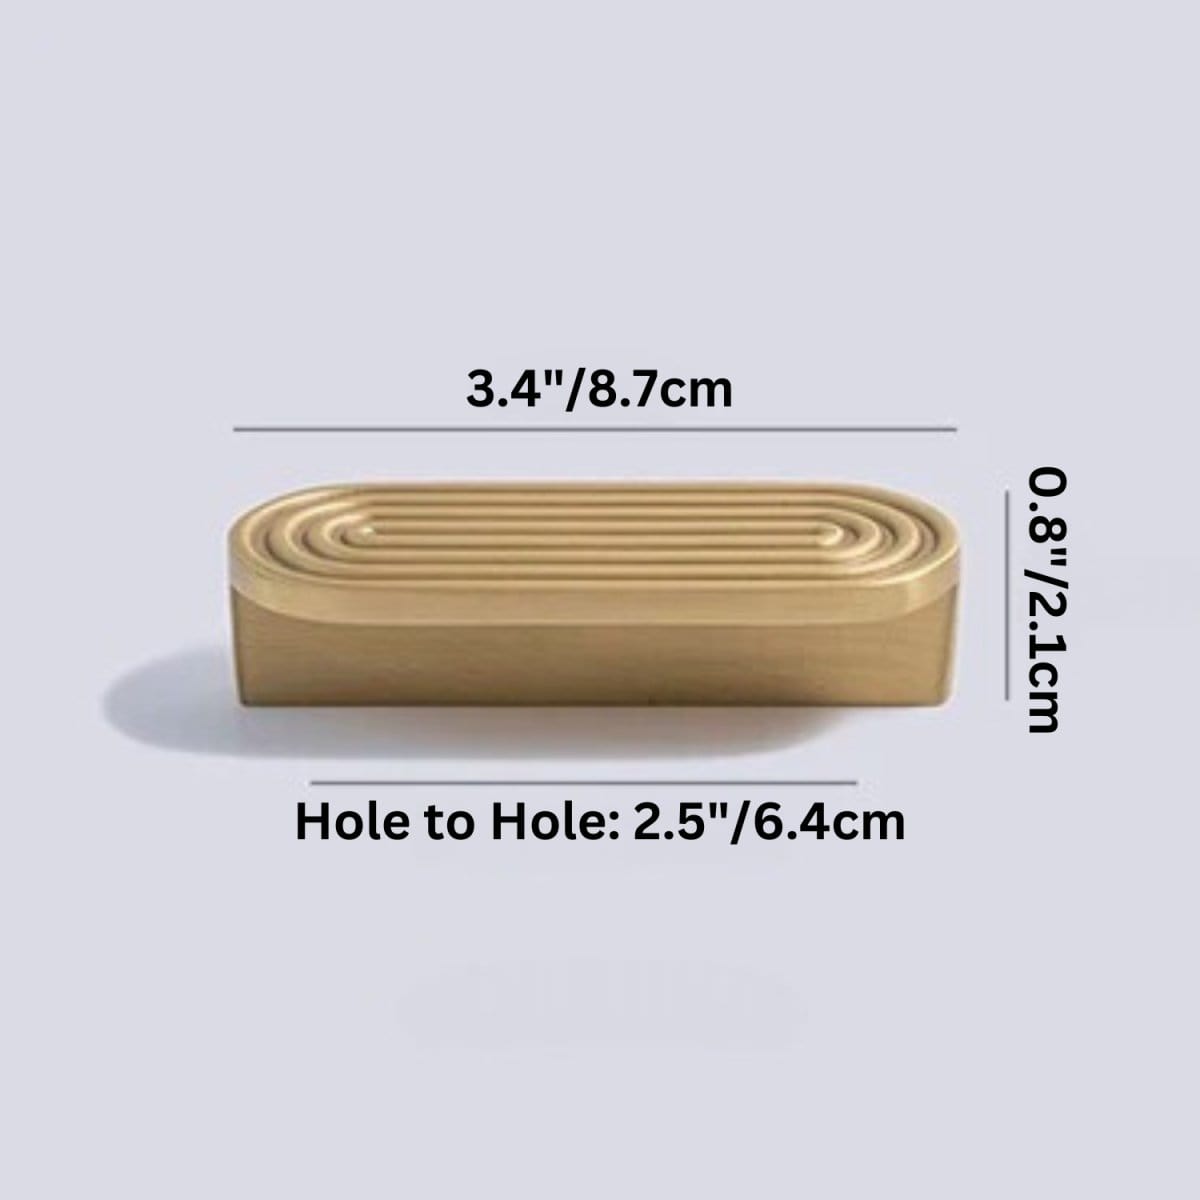 Residence Supply Hole to Hole: 2.5" / 6.4cm Arnas Pull Bar